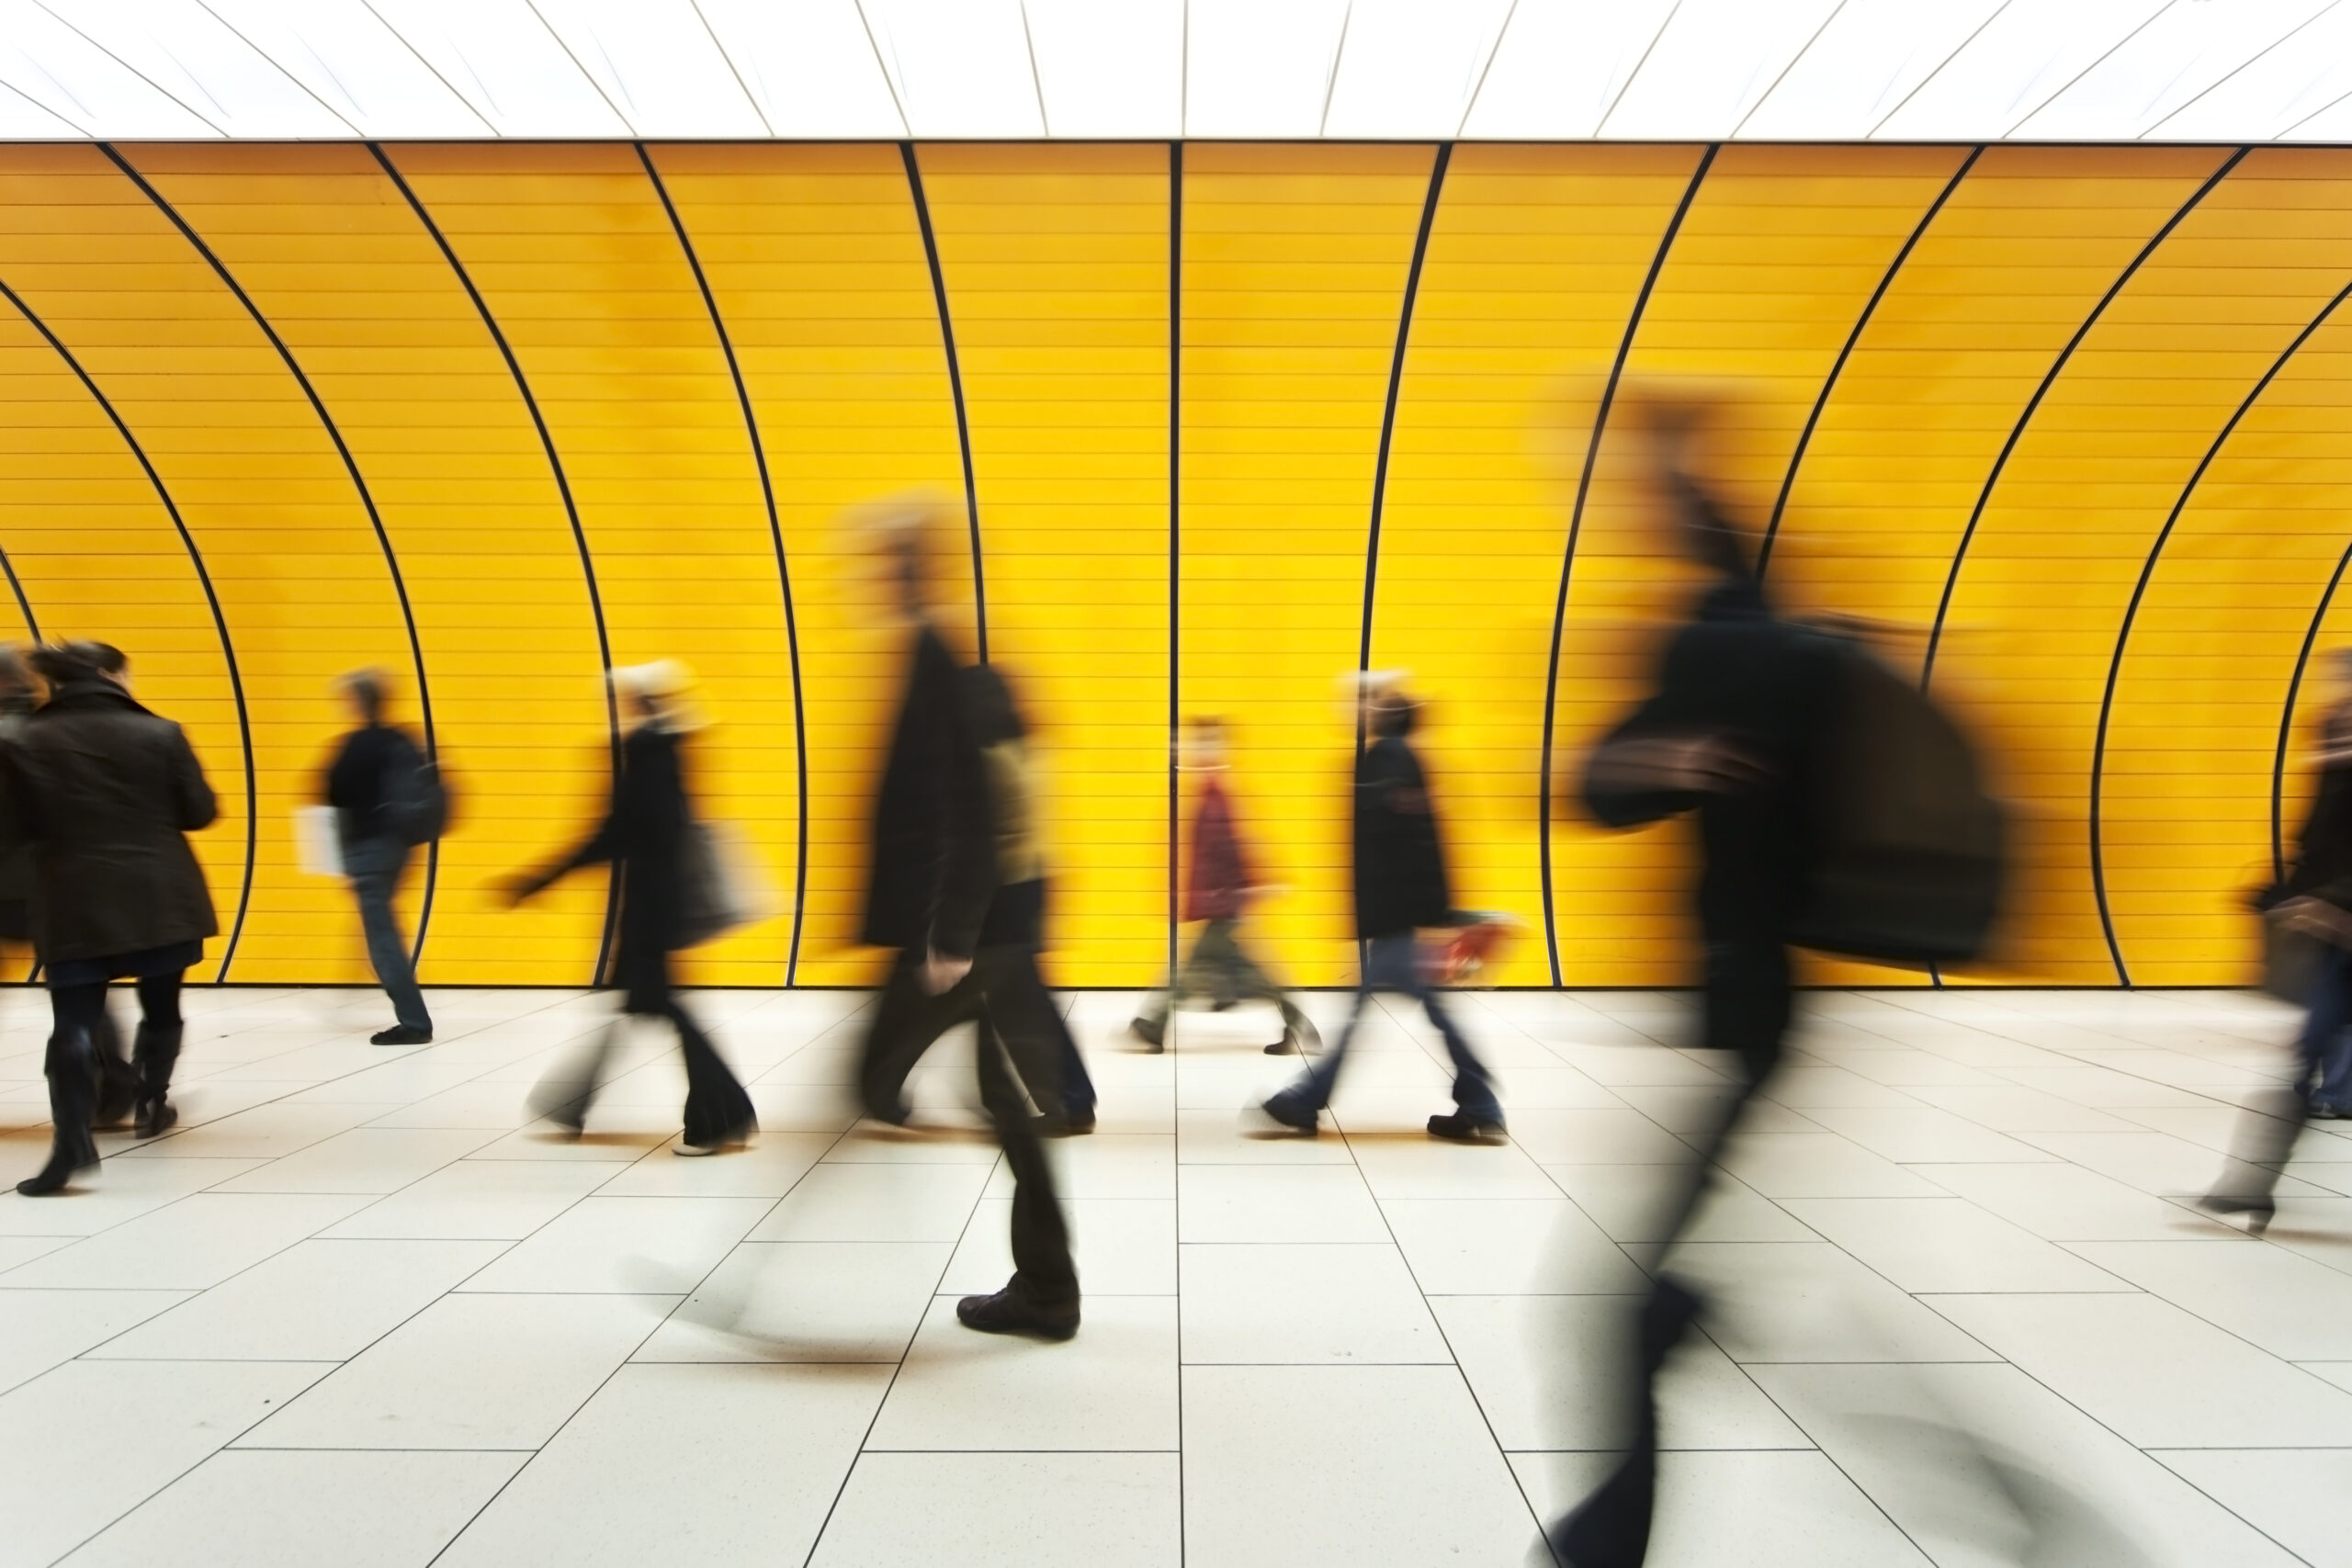 Motion-blurred shot of businesspeople walking through bright yellow hallway.